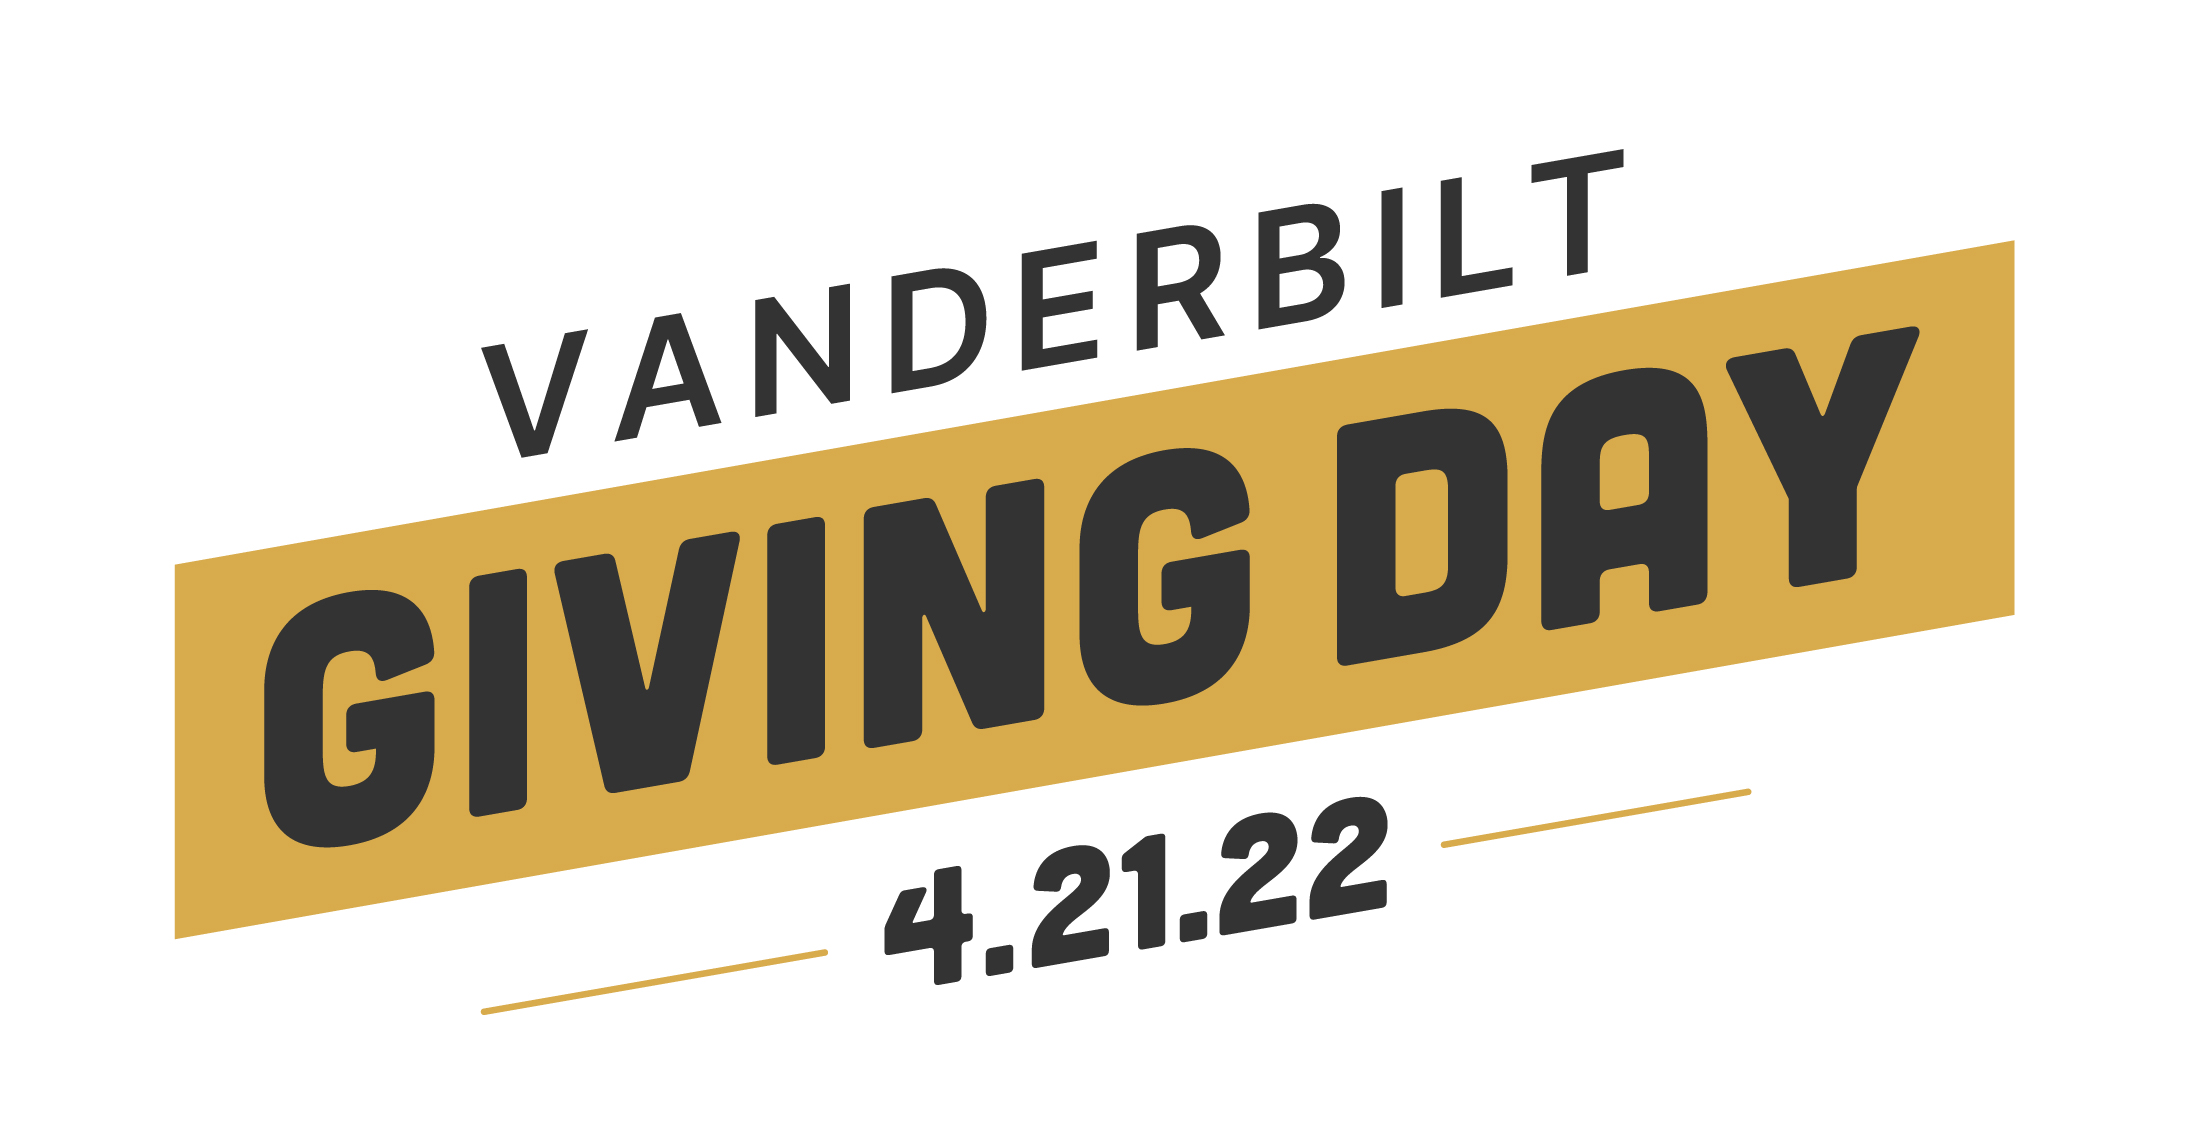 Vanderbilt Giving Day is April 21